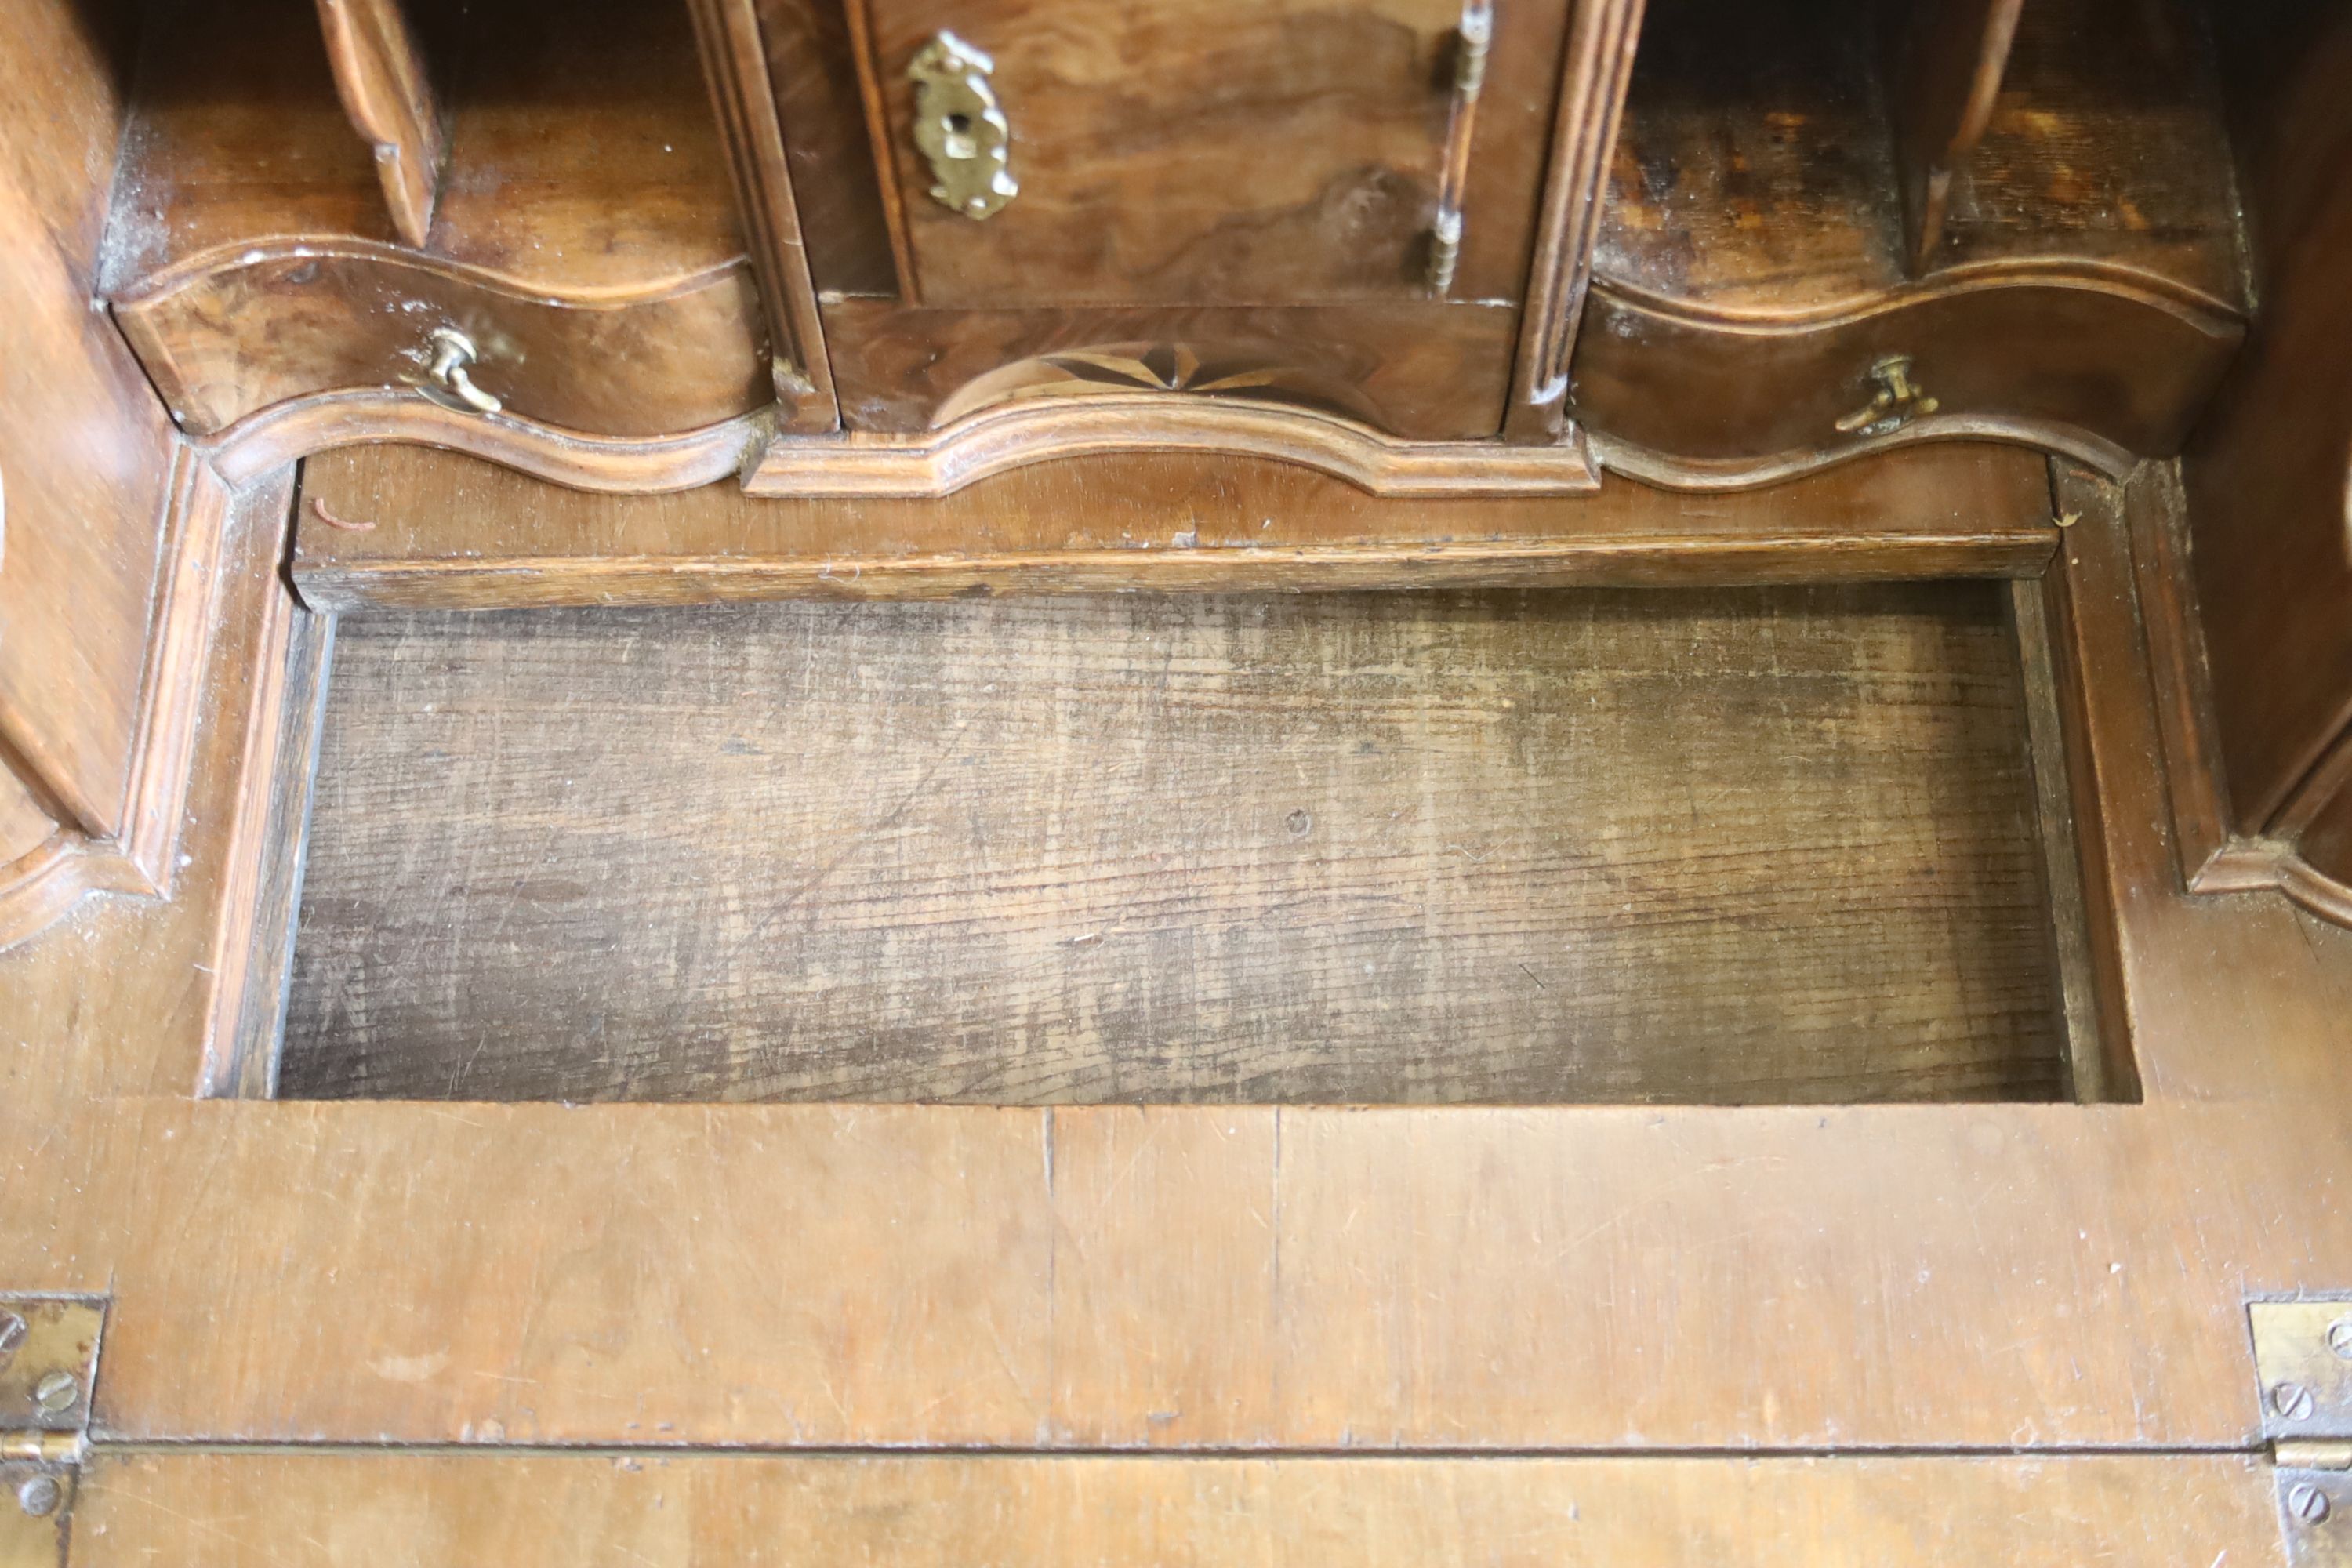 A Queen Anne style walnut double domed top bureau bookcase, length 72cm, width 50cm, height 196cm